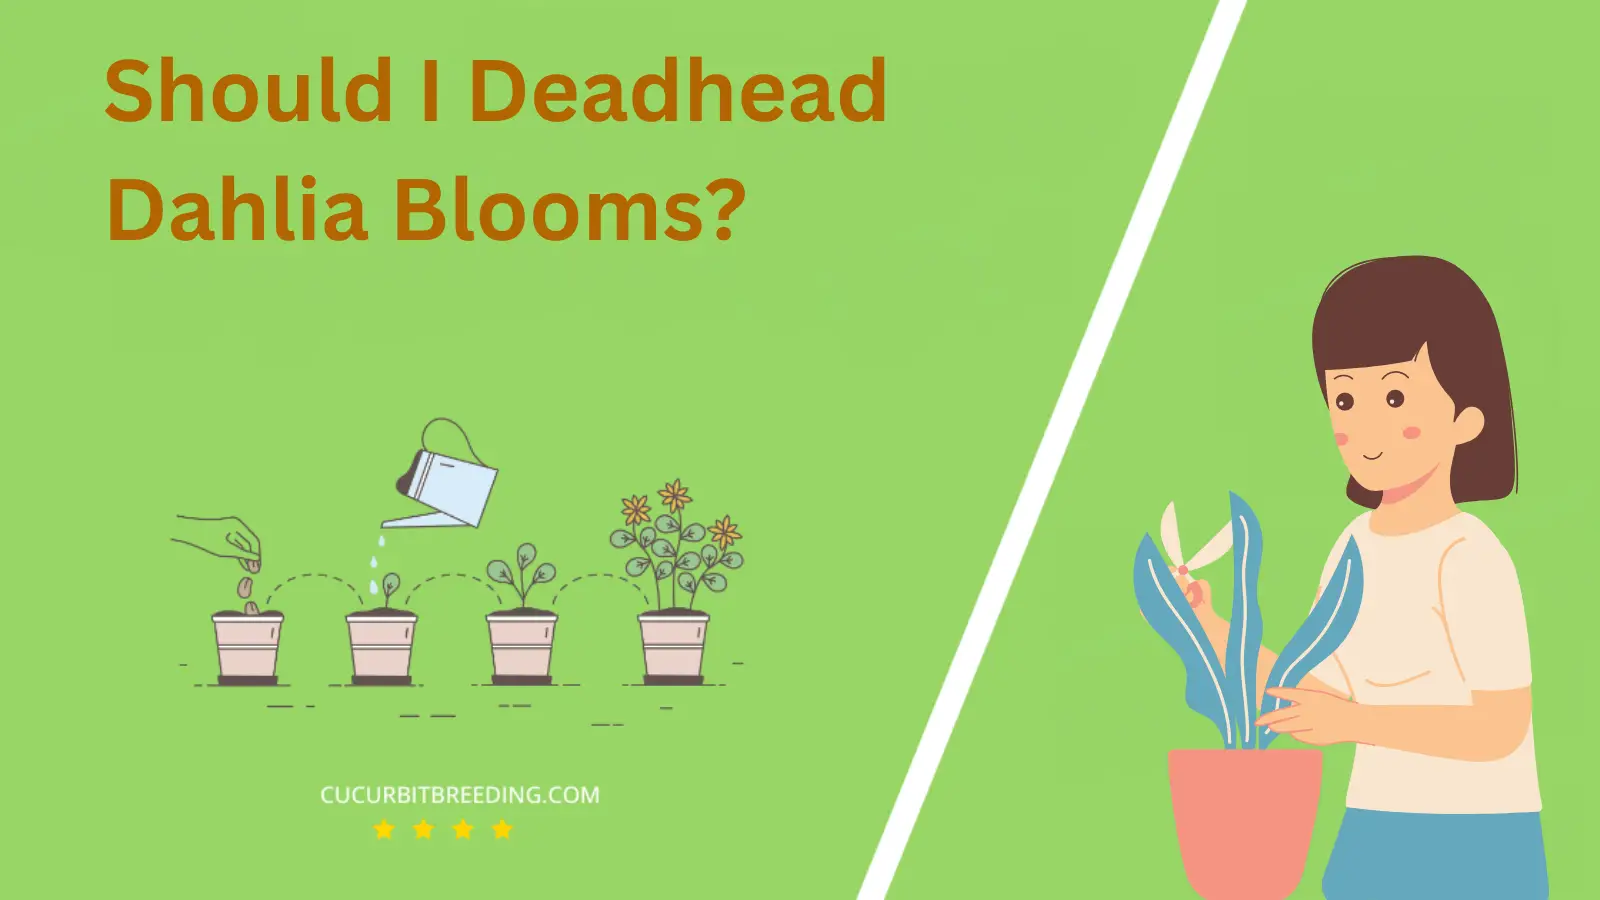 Should I Deadhead Dahlia Blooms?